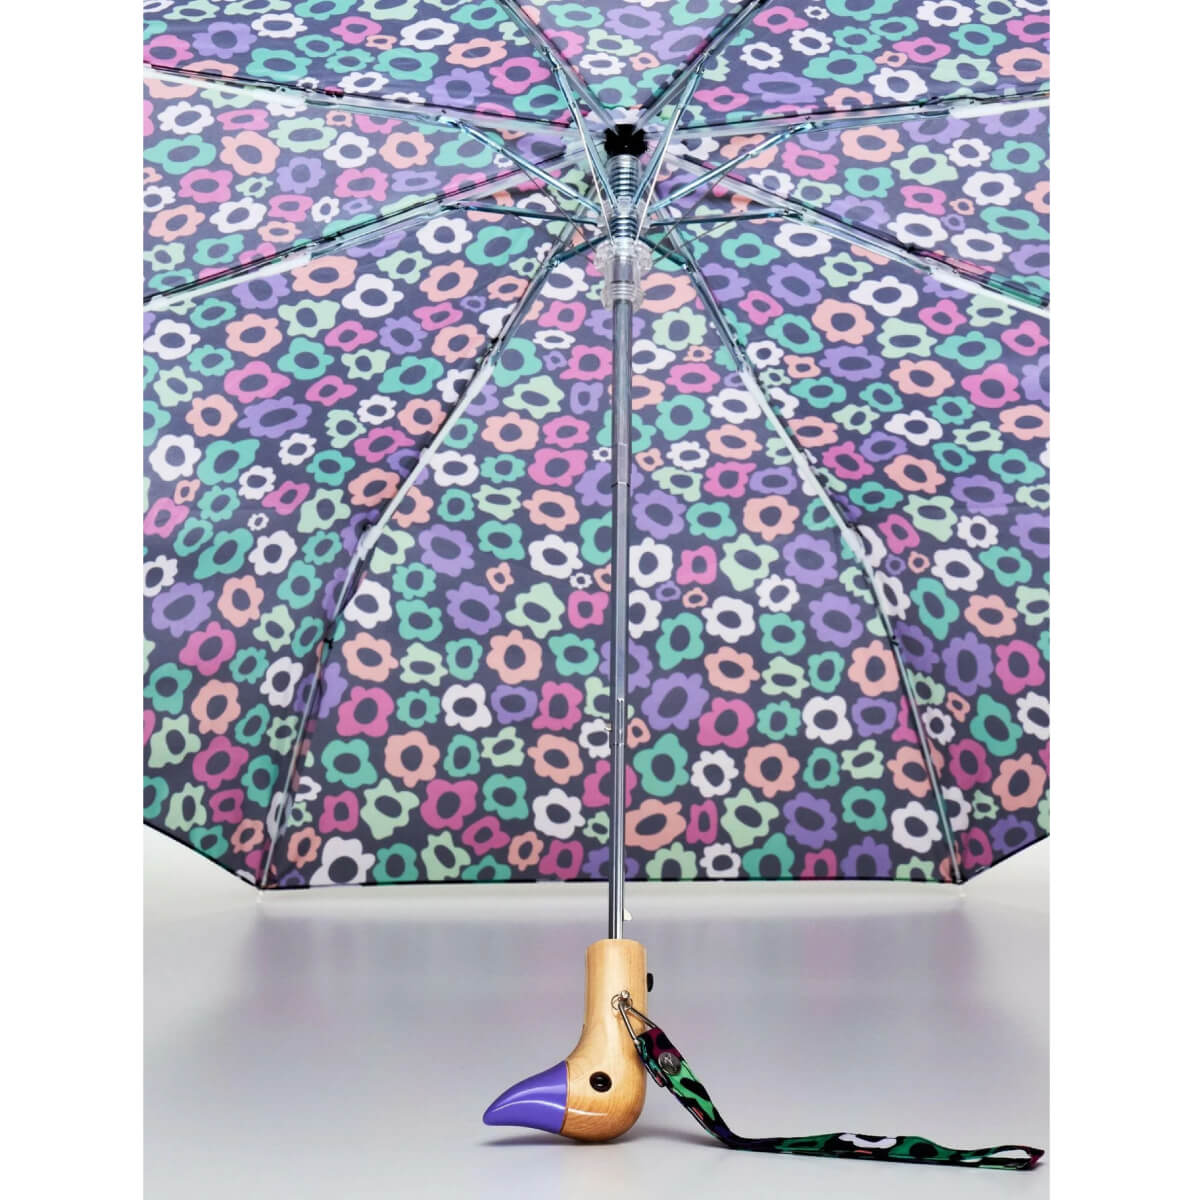 Flower Maze Compact Duckhead Umbrella front black | MILK MONEY milkmoney.co | white elephant gift ideas, gift, mother's day gift ideas, white elephant gift, gift shops near me, cute umbrella